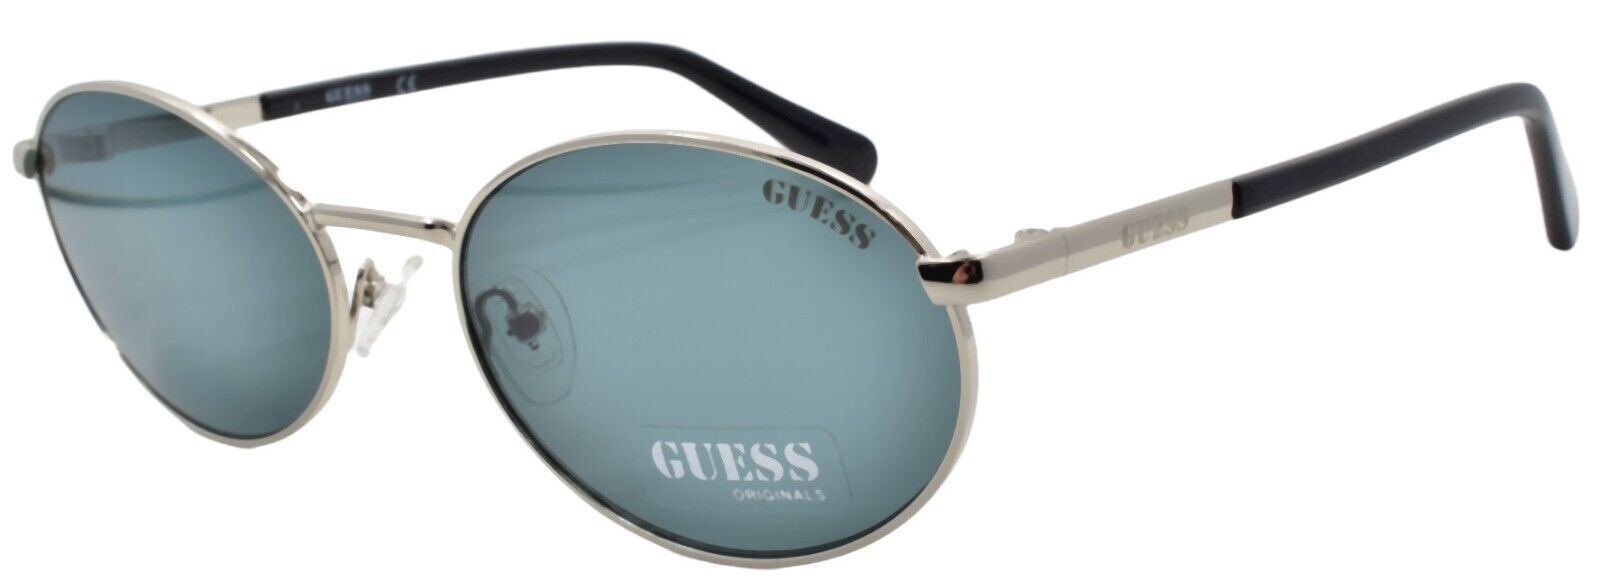 1-GUESS GU8235 10N Unisex Sunglasses 57-19-140 Shiny Light Nickeltin / Green-889214282309-IKSpecs